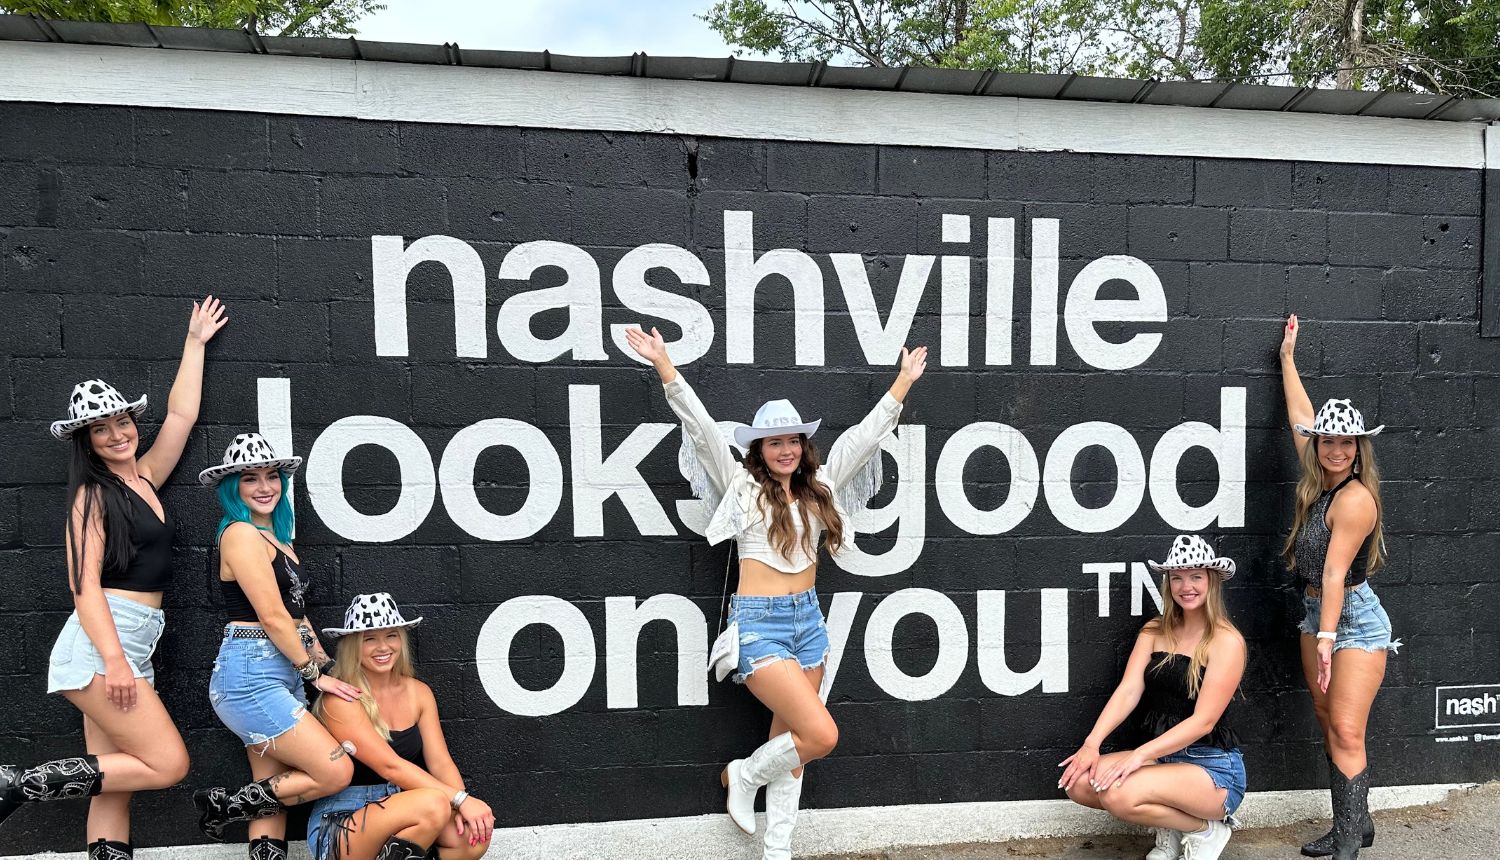 Bachelorette Trip to Nashville Looks Good on You Mural